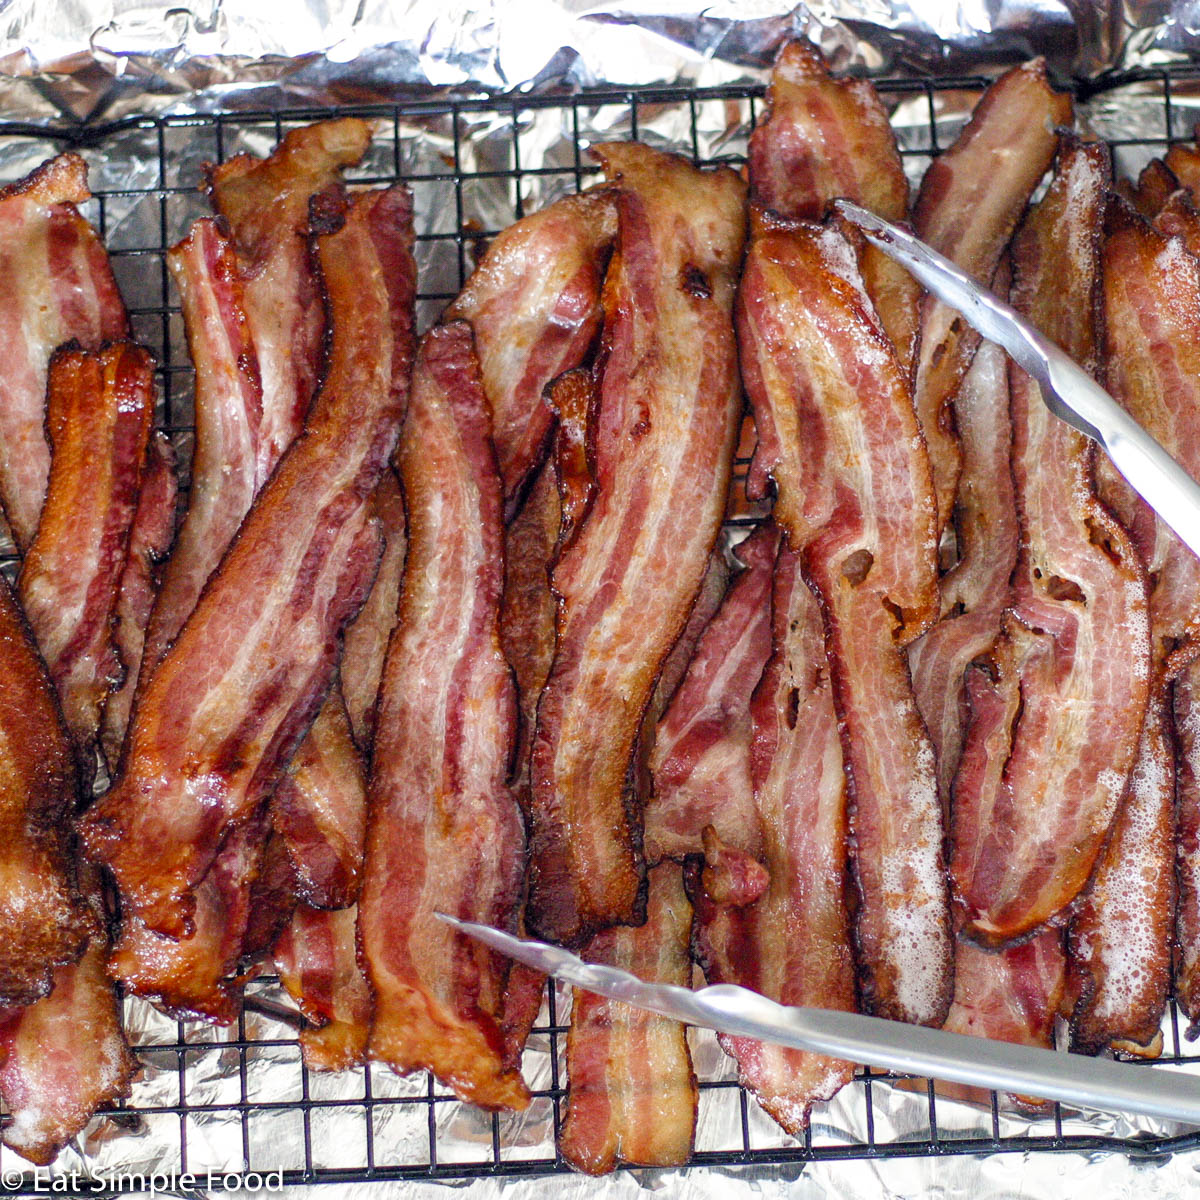 https://eatsimplefood.com/wp-content/uploads/2020/04/Cooked-Bacon-1200-EatSimpleFood.com_.jpg